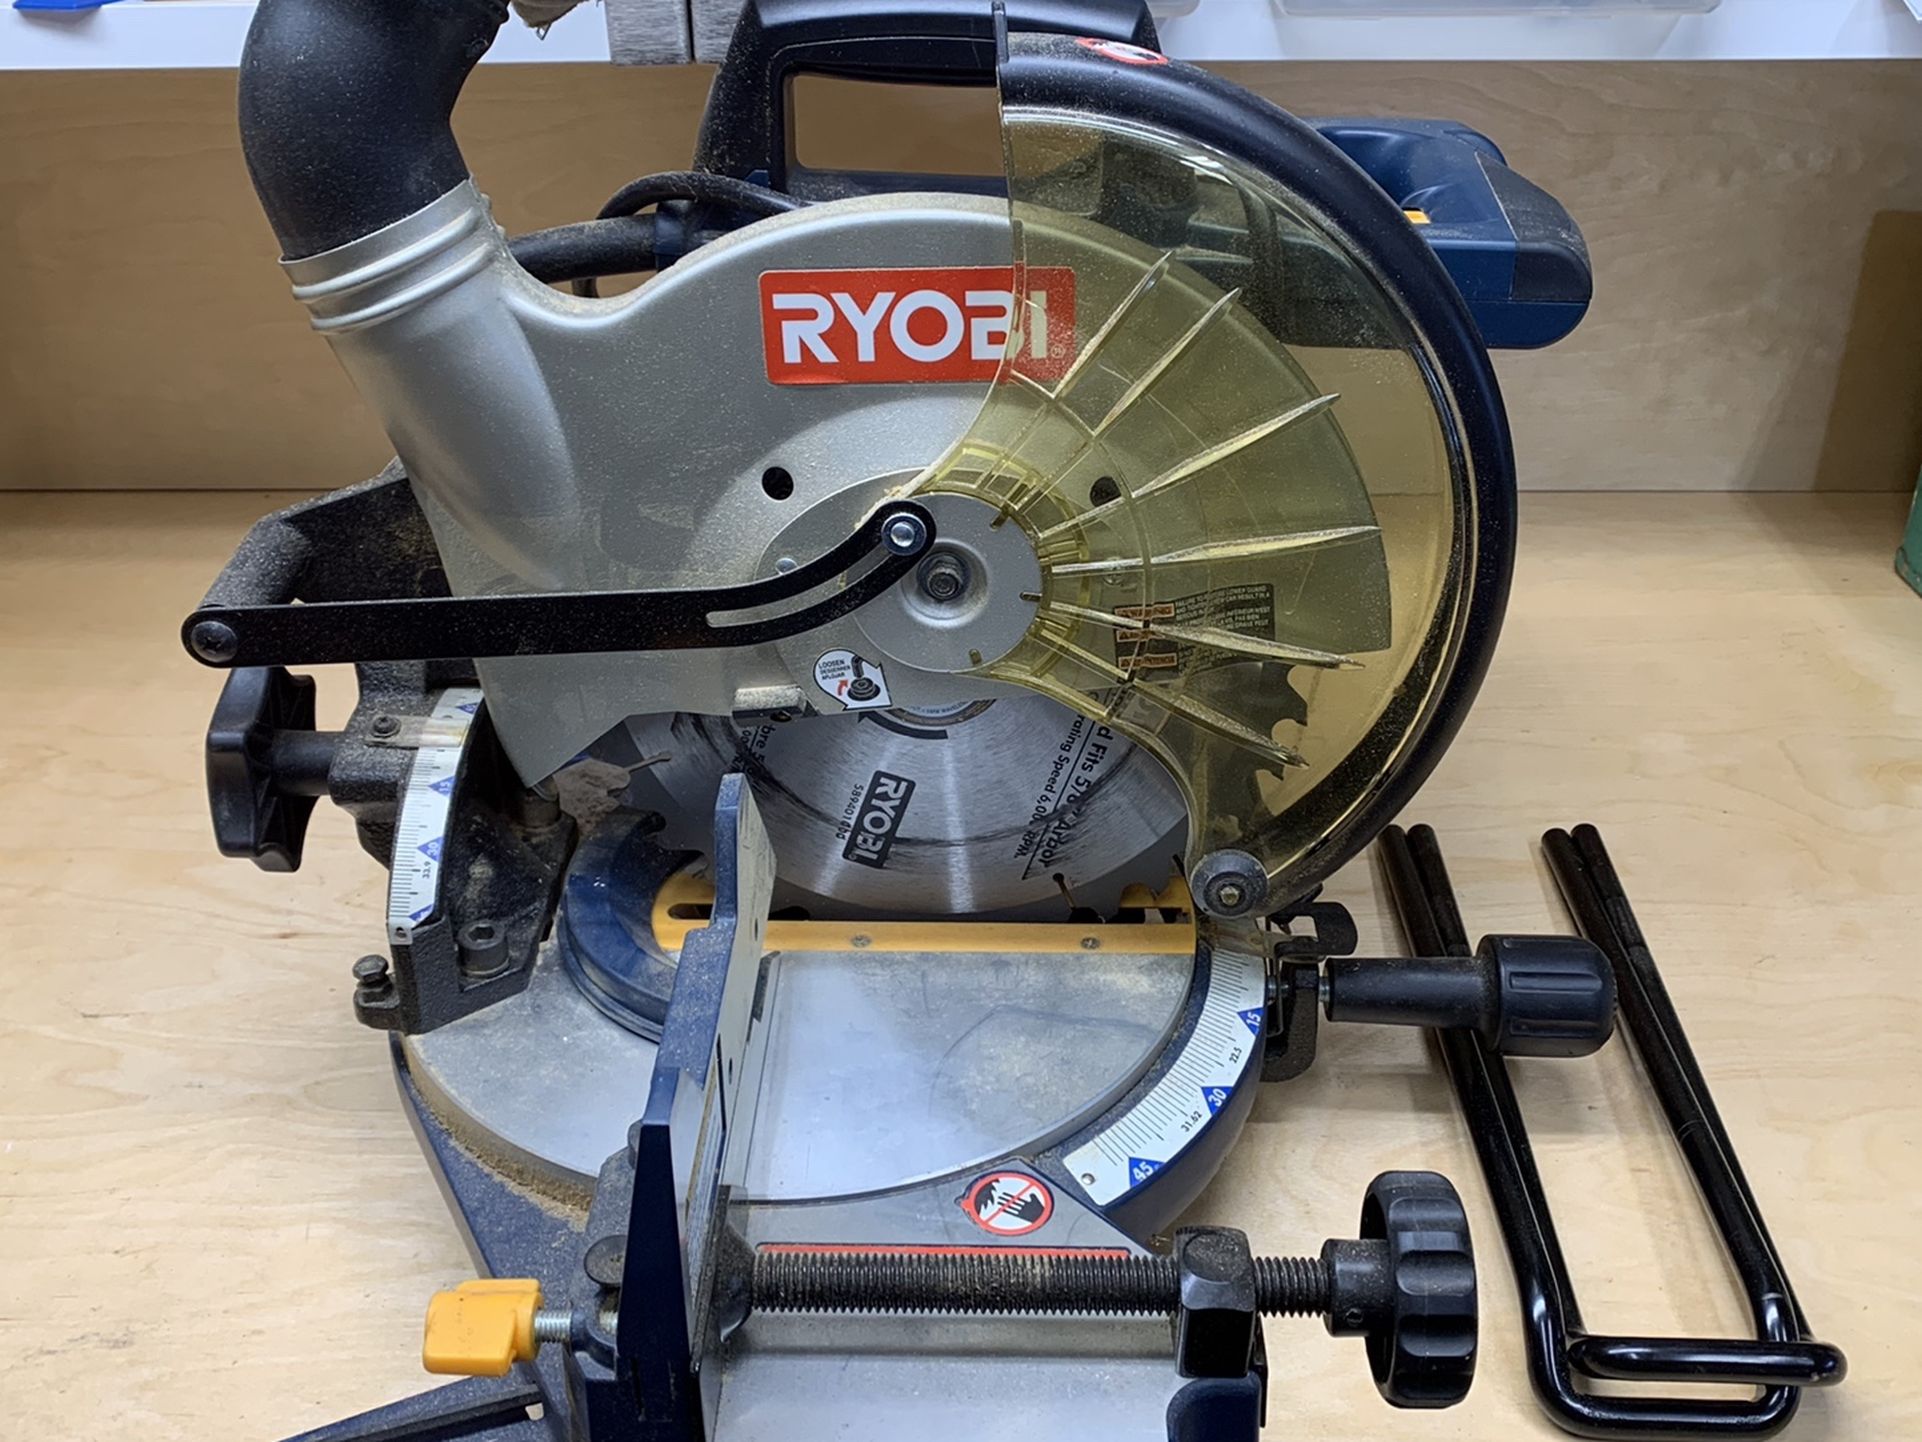 Ryobi 10” Compound Mitre Saw With Laser